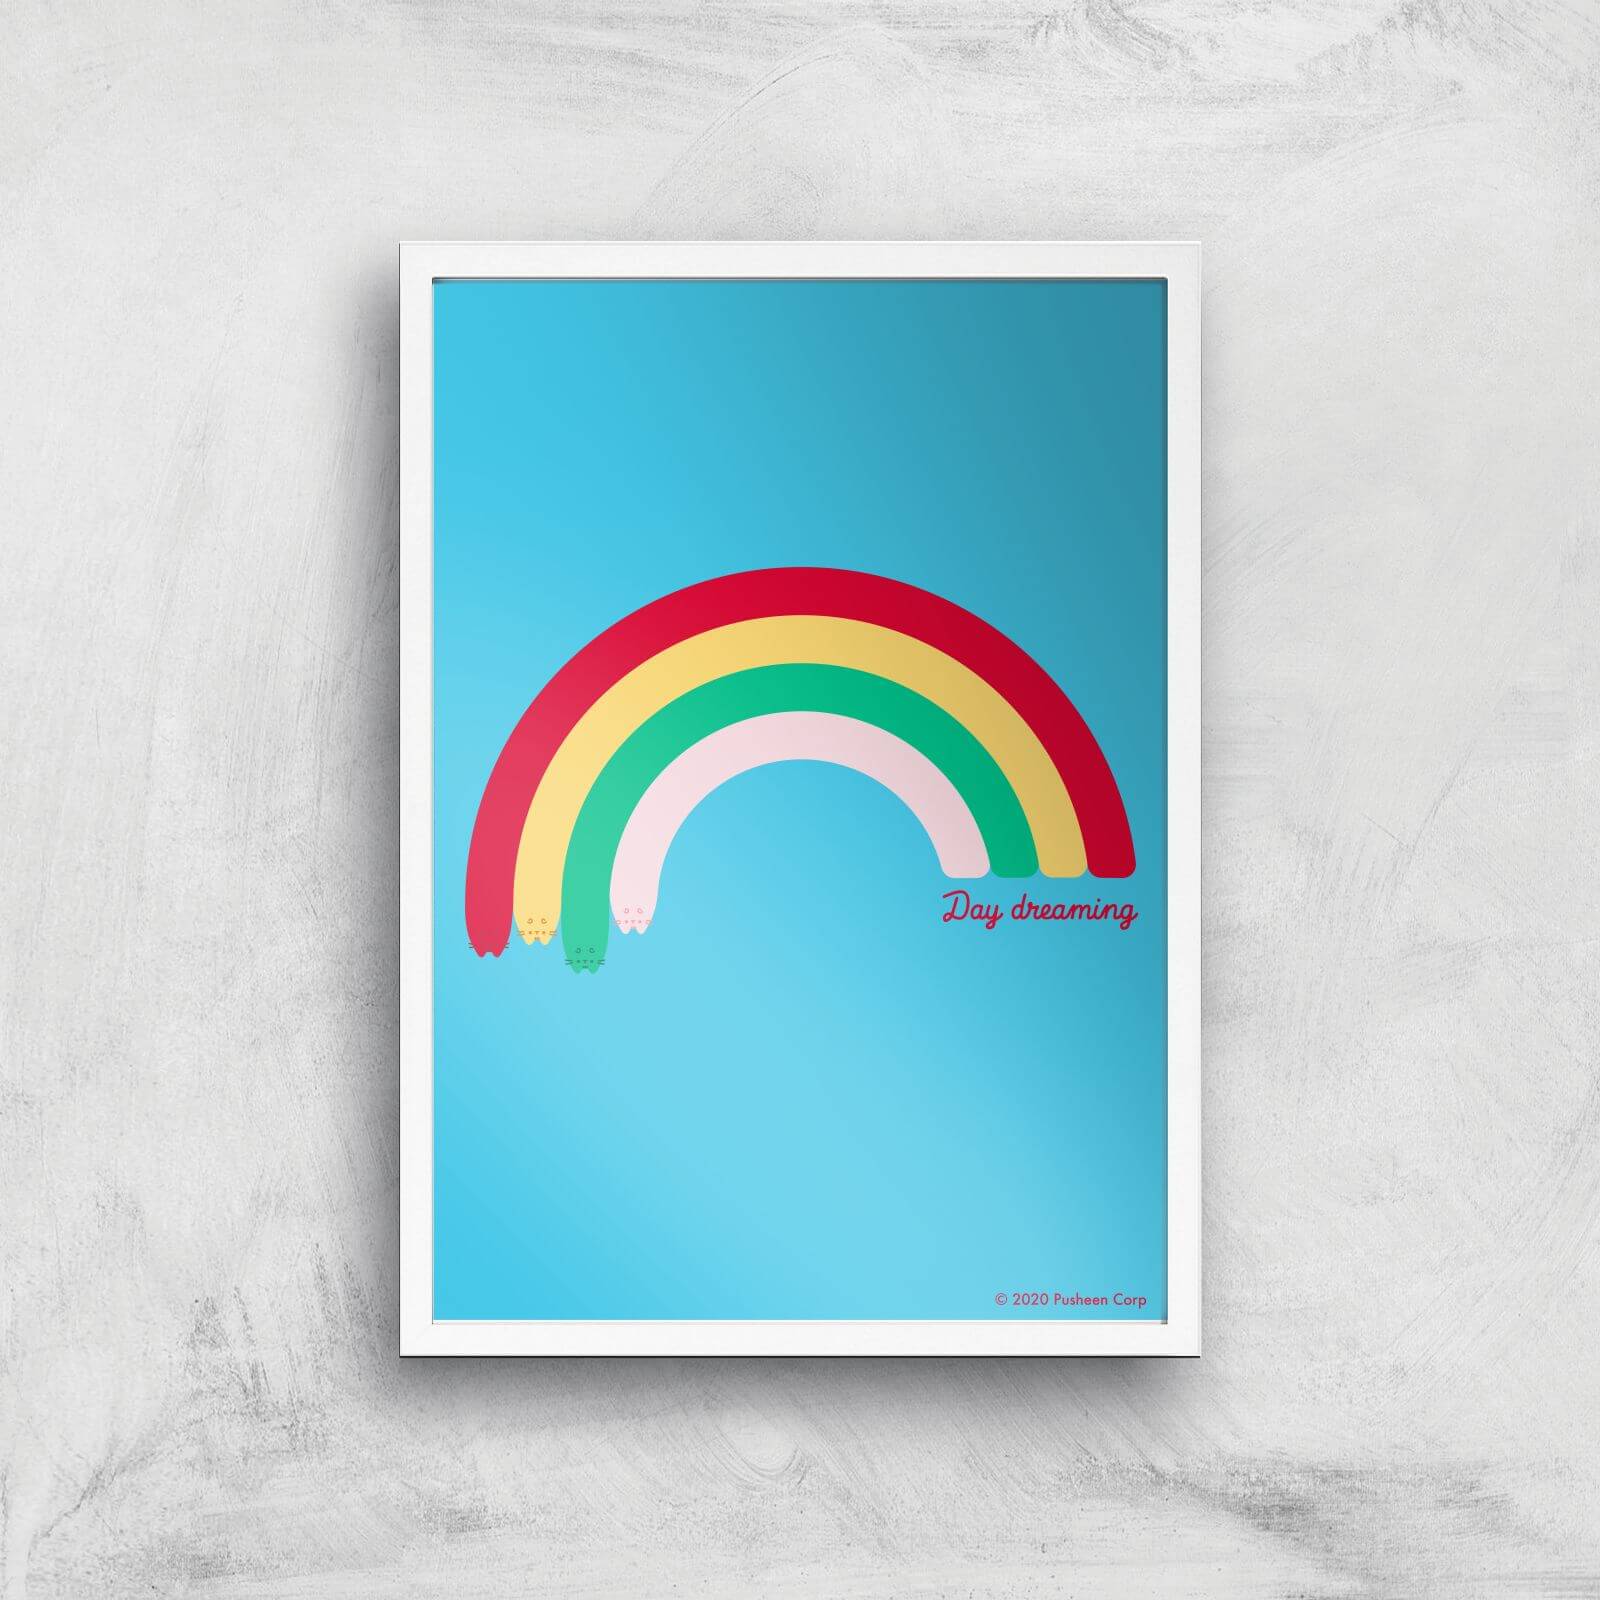 Pusheen Large Rainbow Giclee Art Print - A2 - White Frame